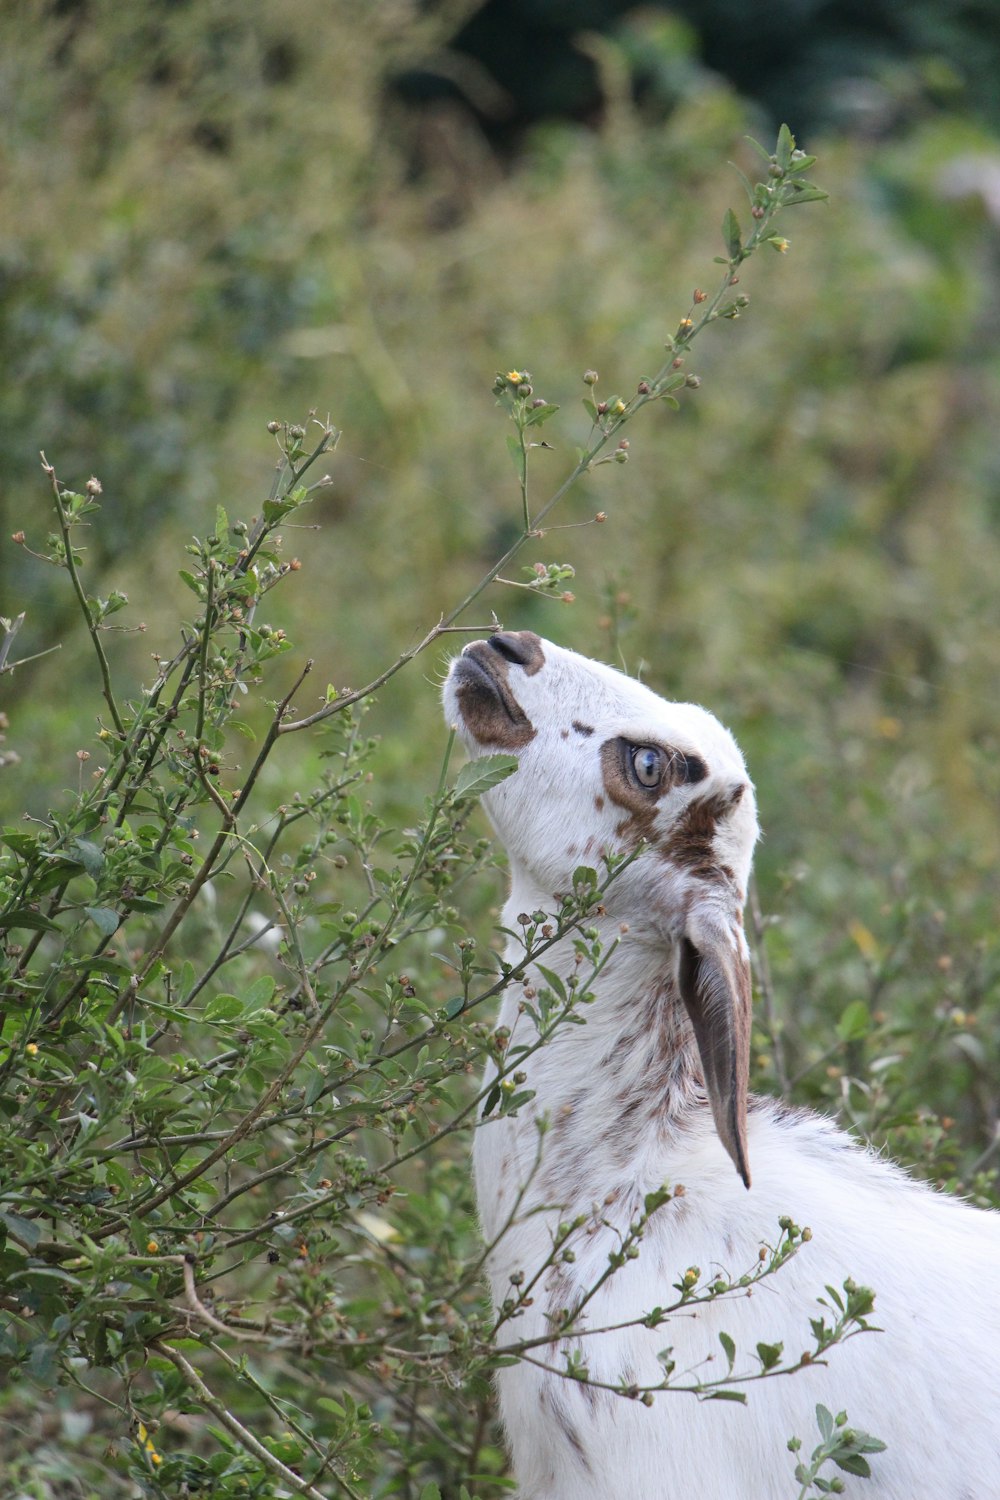 a close up of a goat near a bush